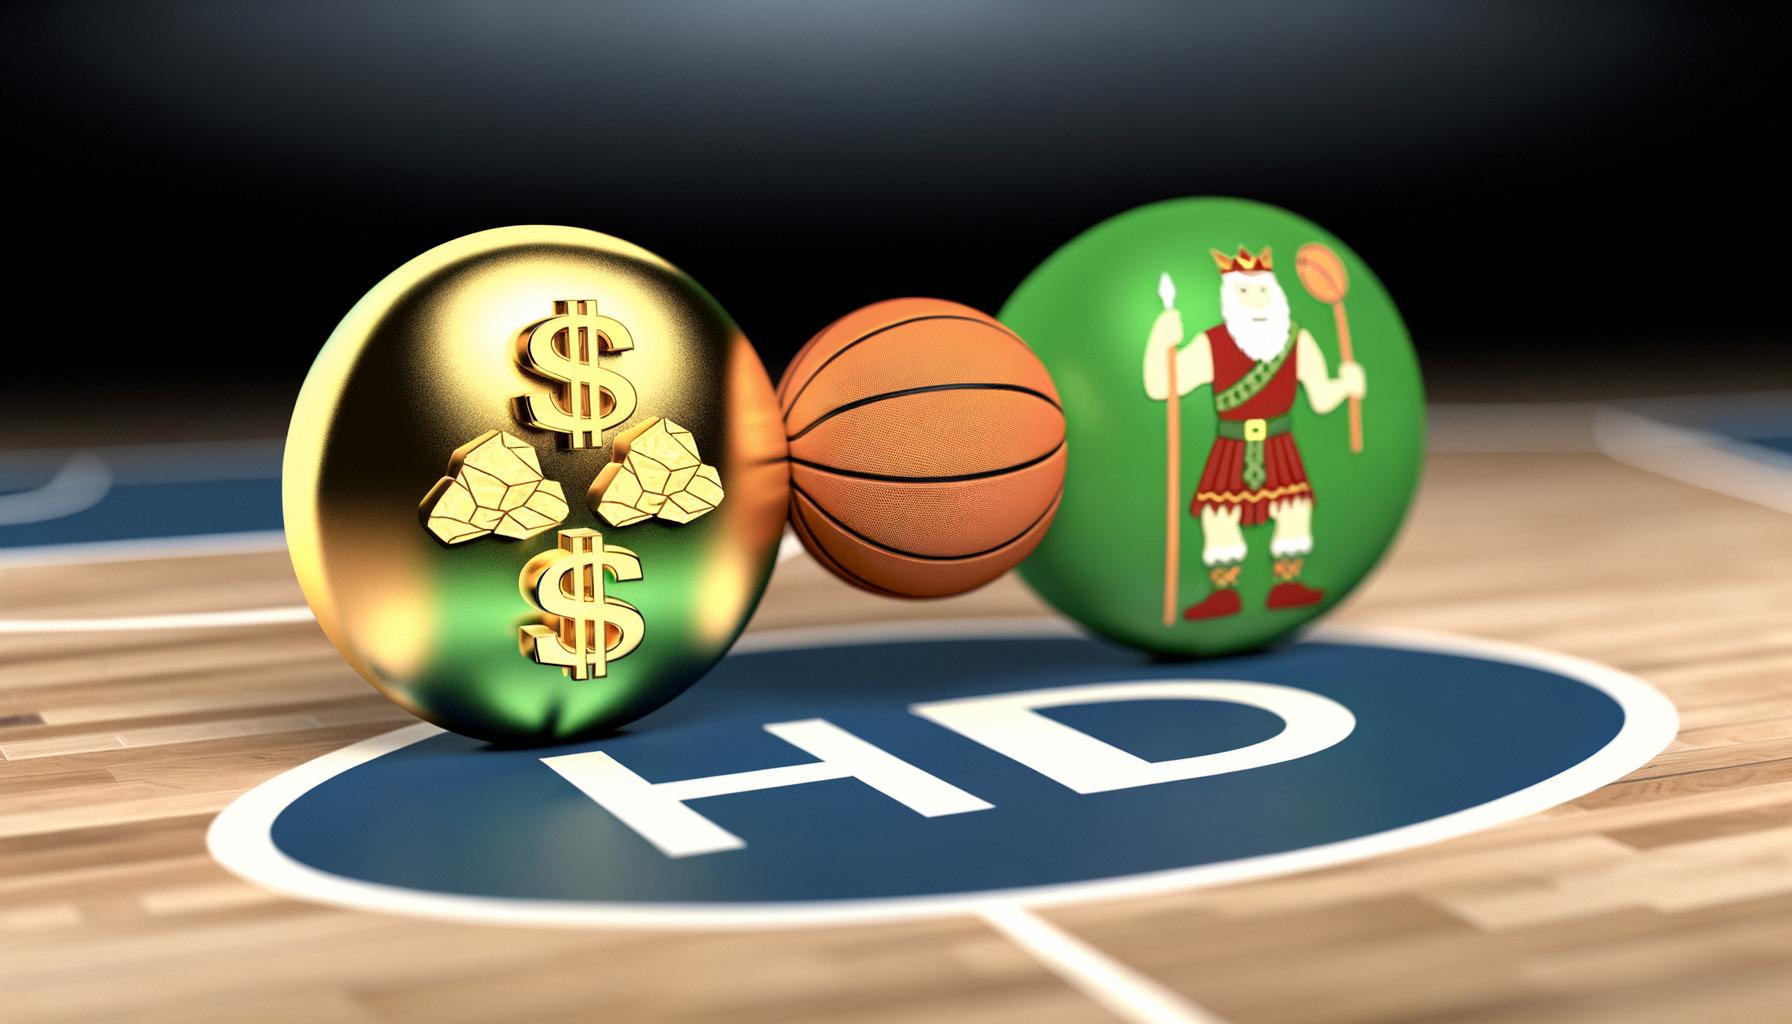 Nuggets, Celtics play preseason games in Abu Dhabi for global NBA promotion